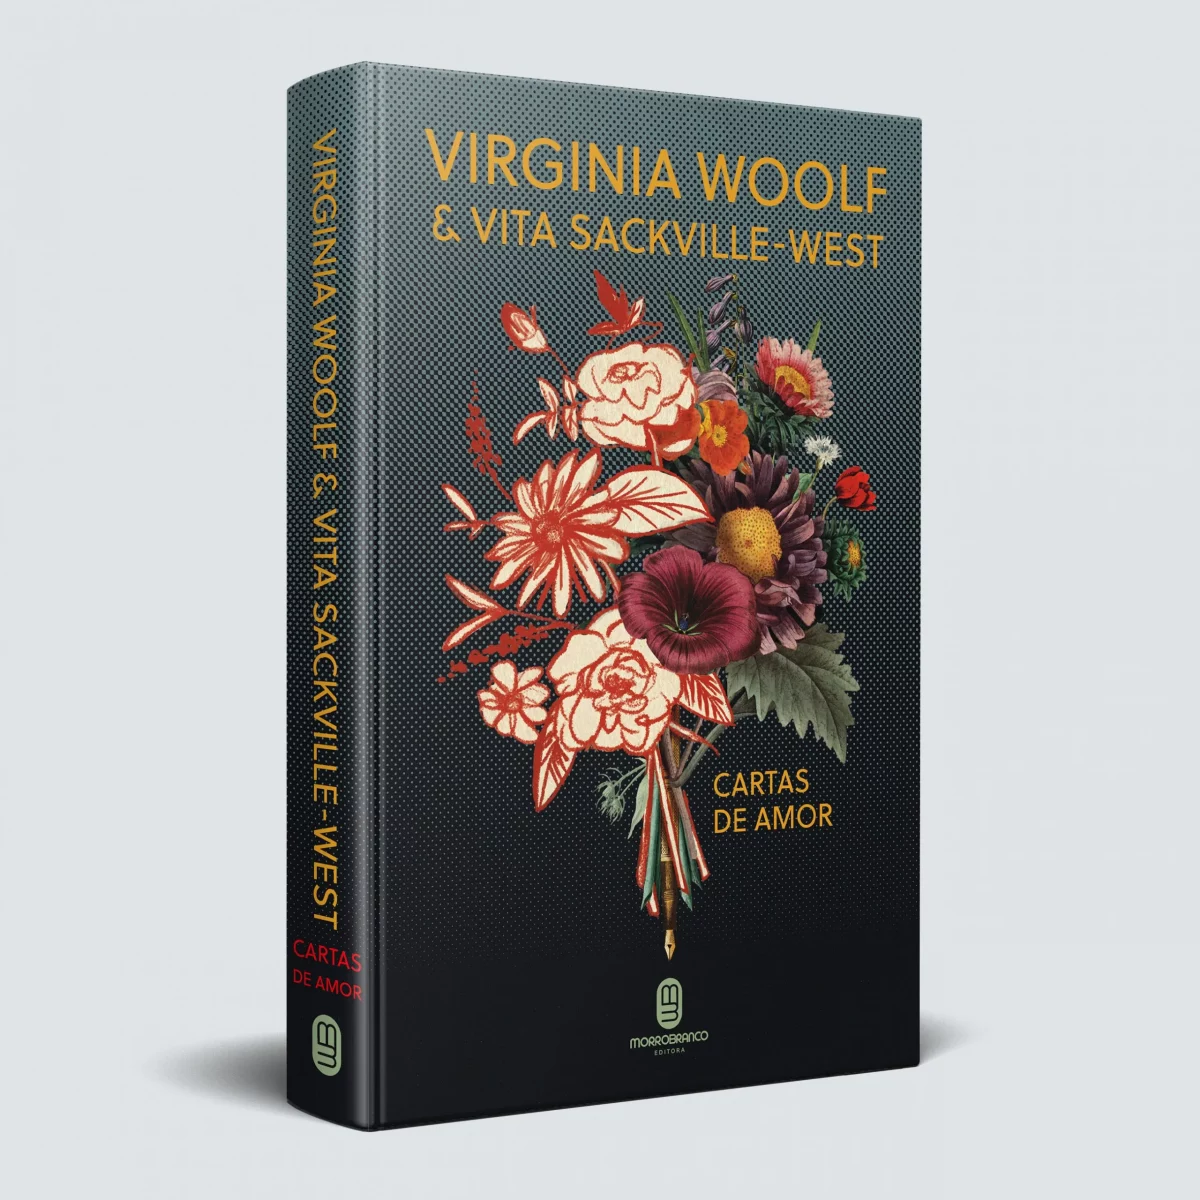 Capa da edição de "Virginia Woolf & Vita Sackville-West: cartas de amor"